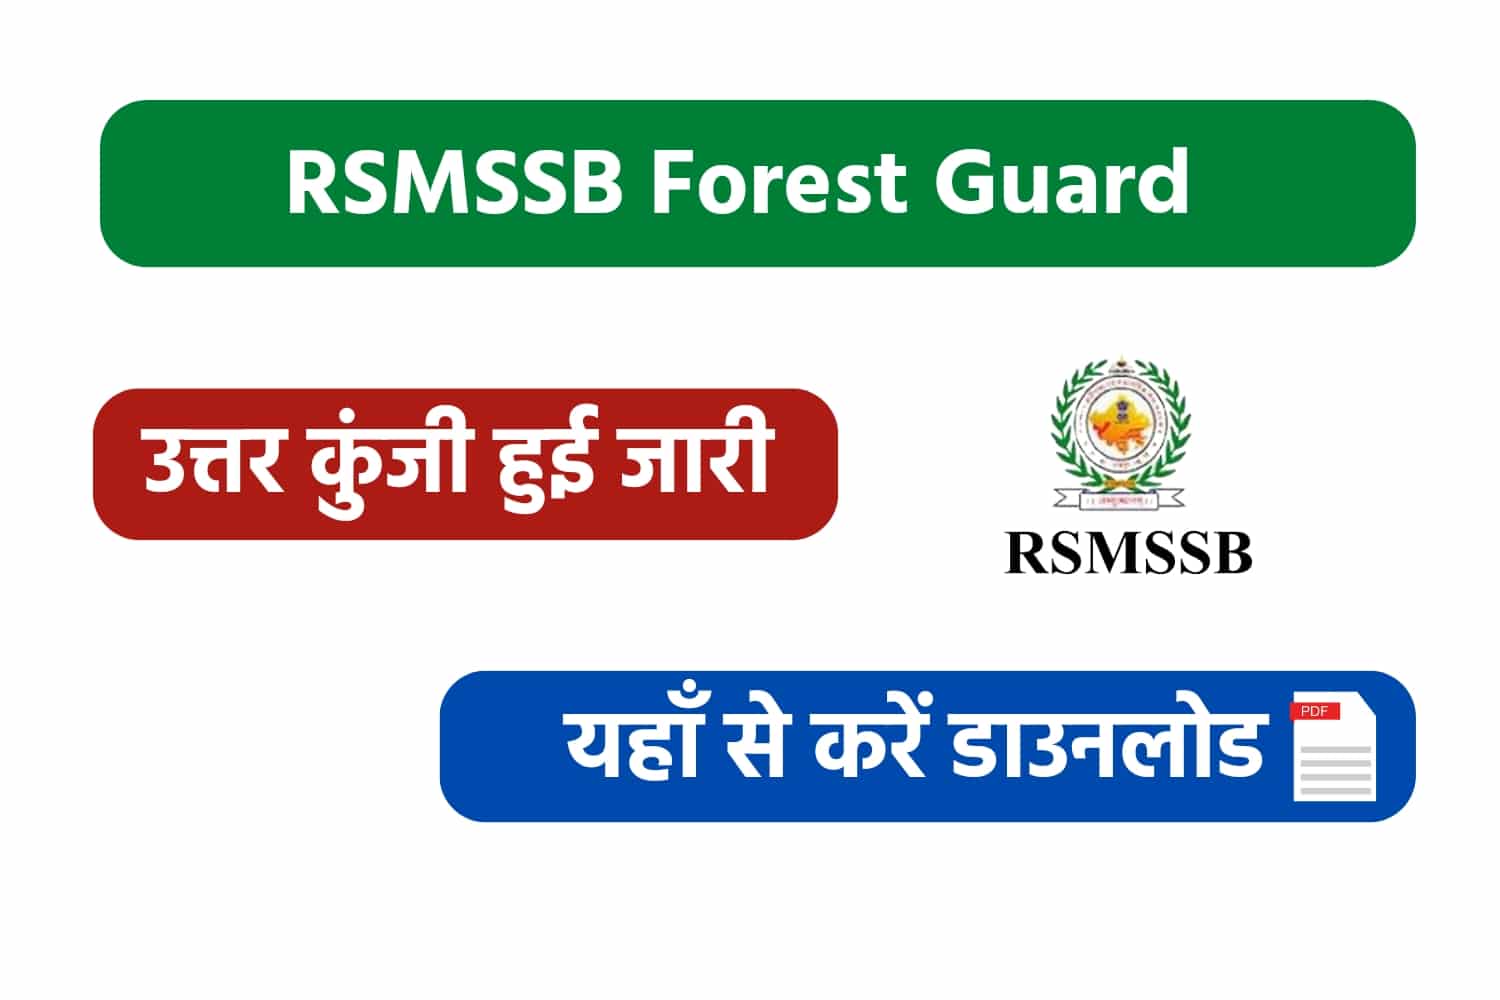 RSMSSB Forest Guard 2020 Answer Key | राजस्थान वनरक्षक उत्तर कुंजी